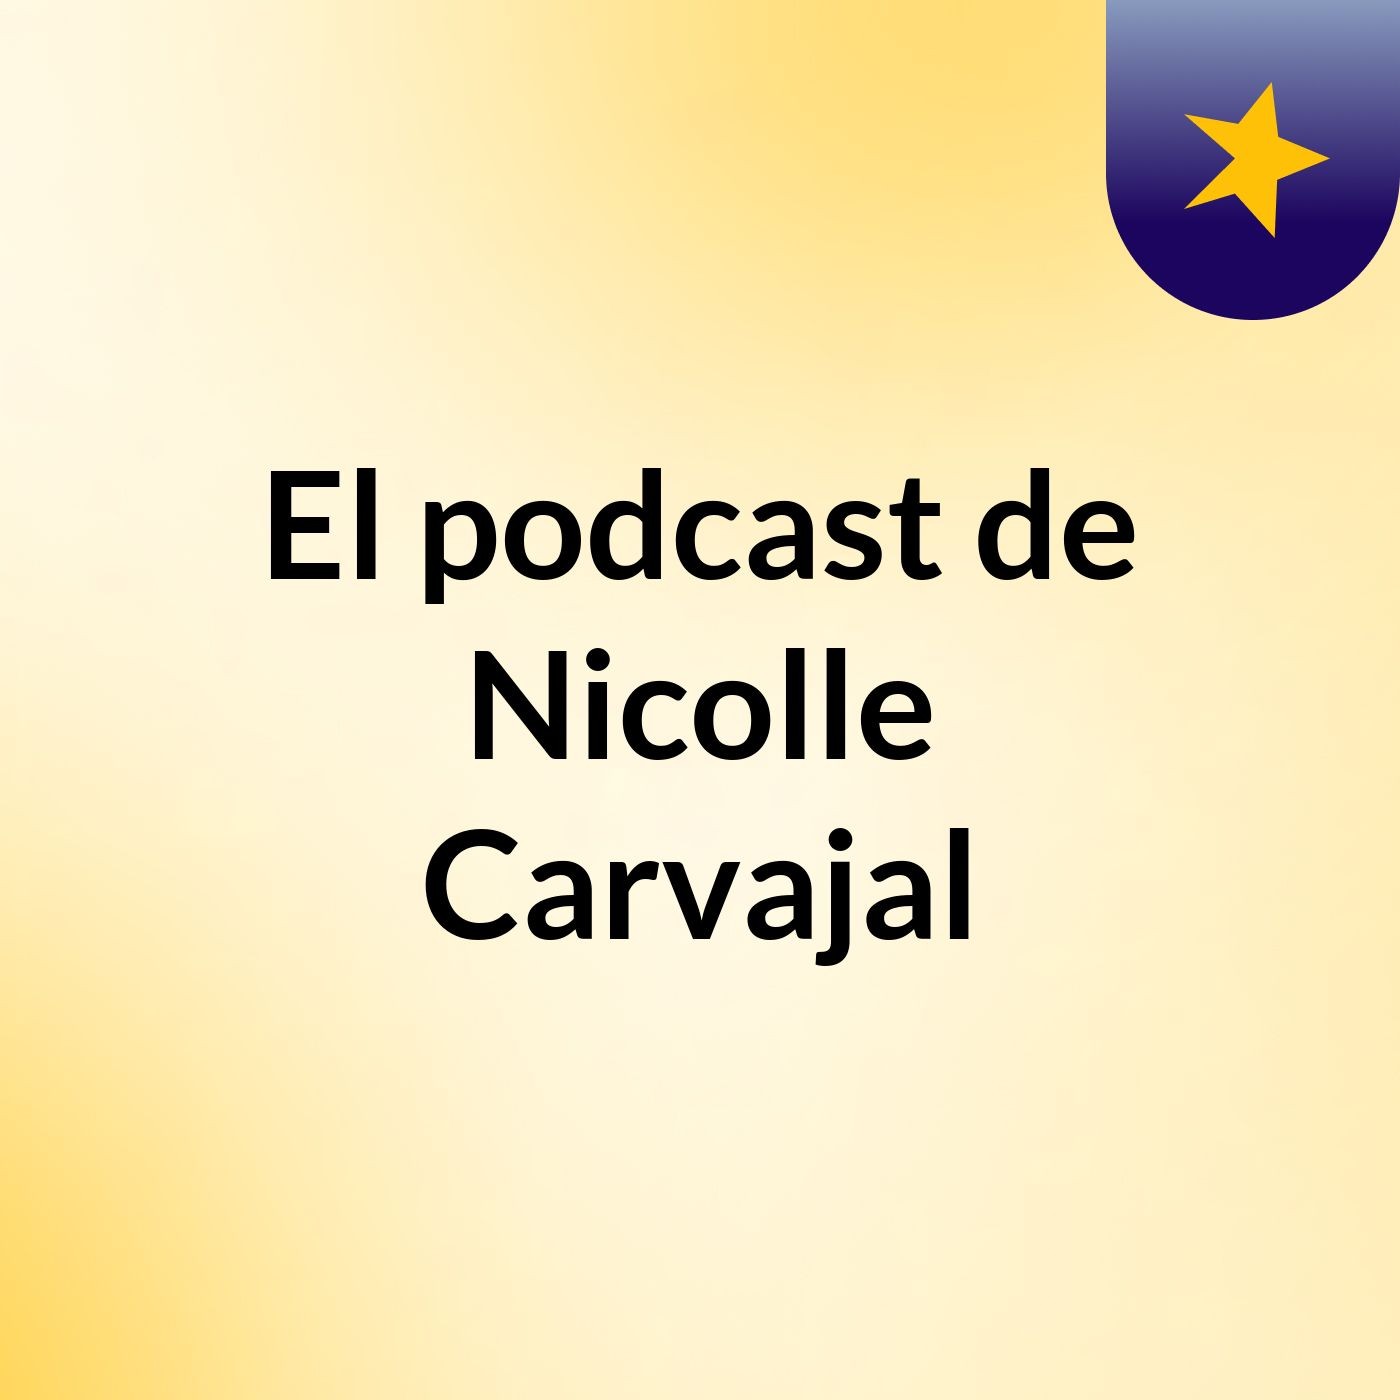 El podcast de Nicolle Carvajal